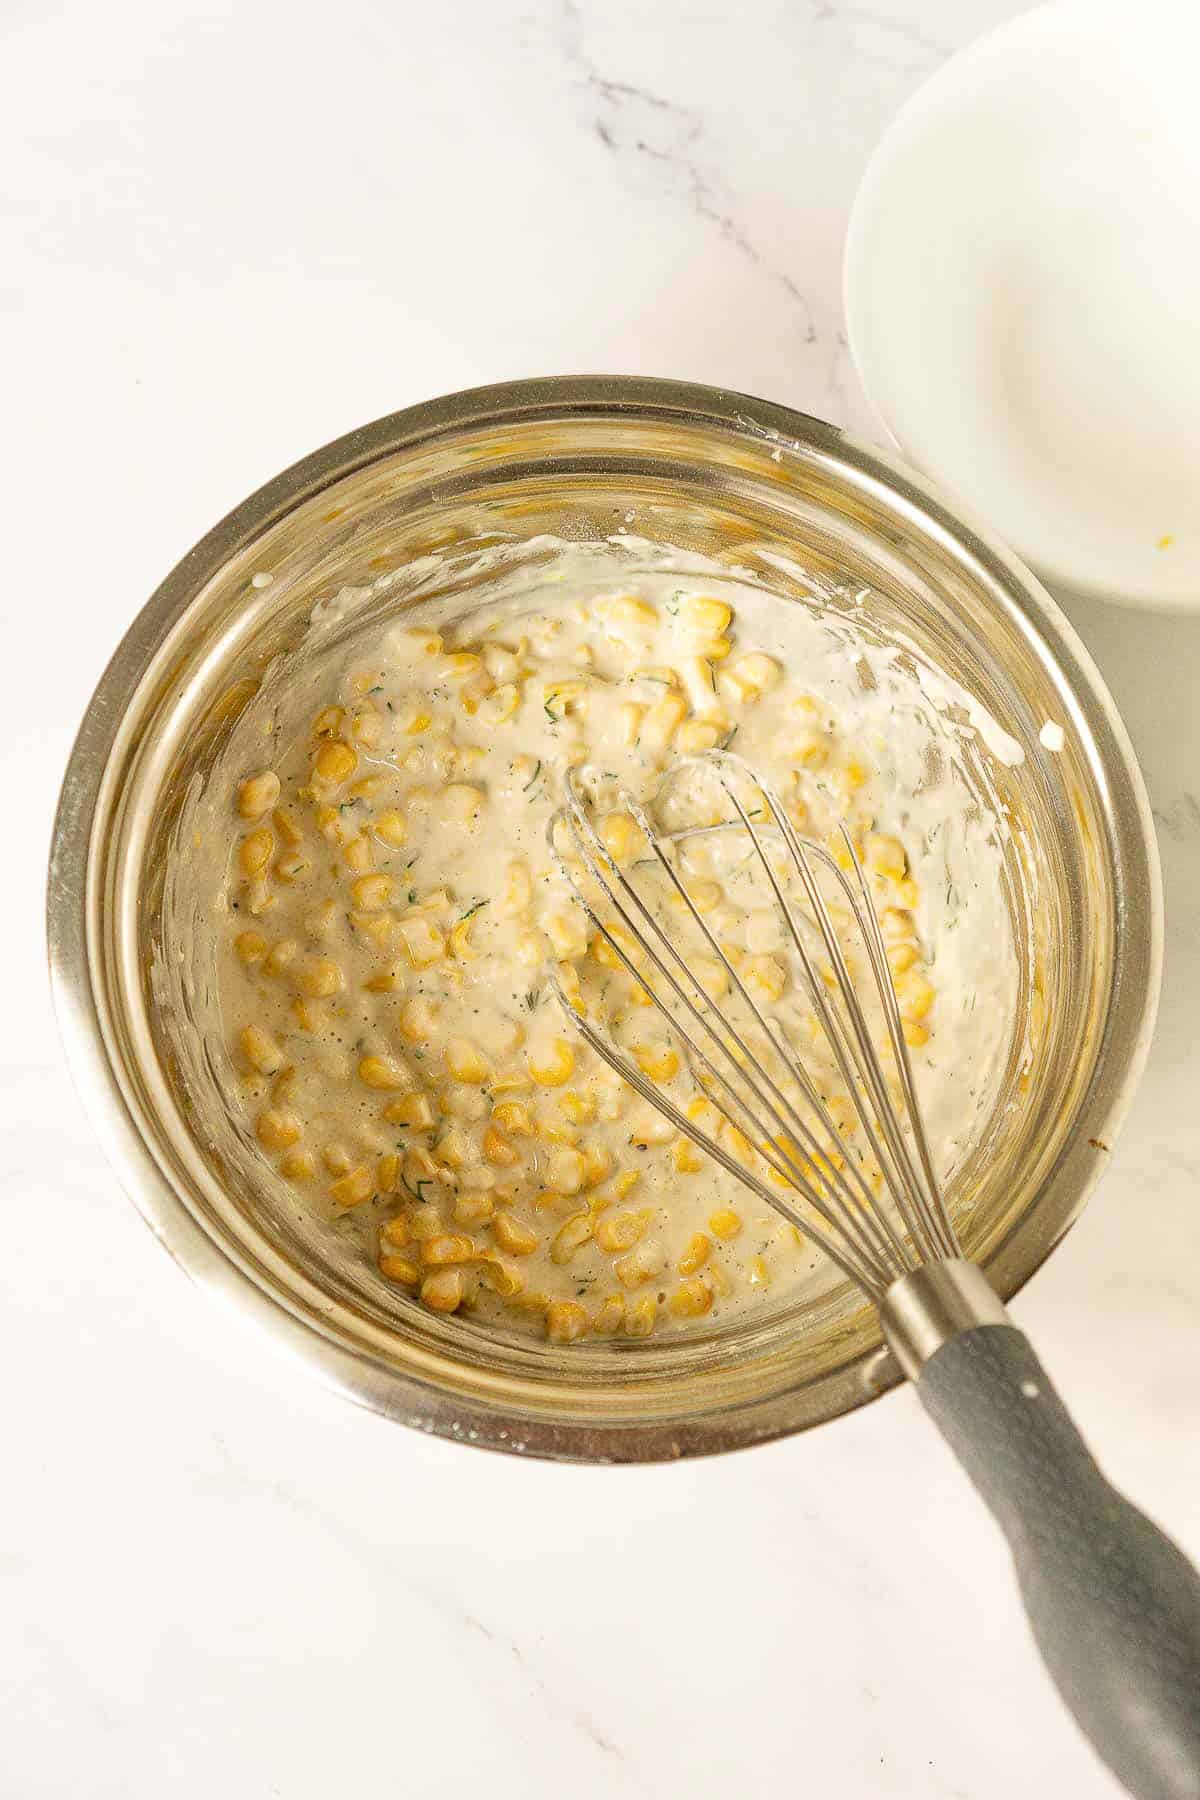 Corn fritter batter in a bowl